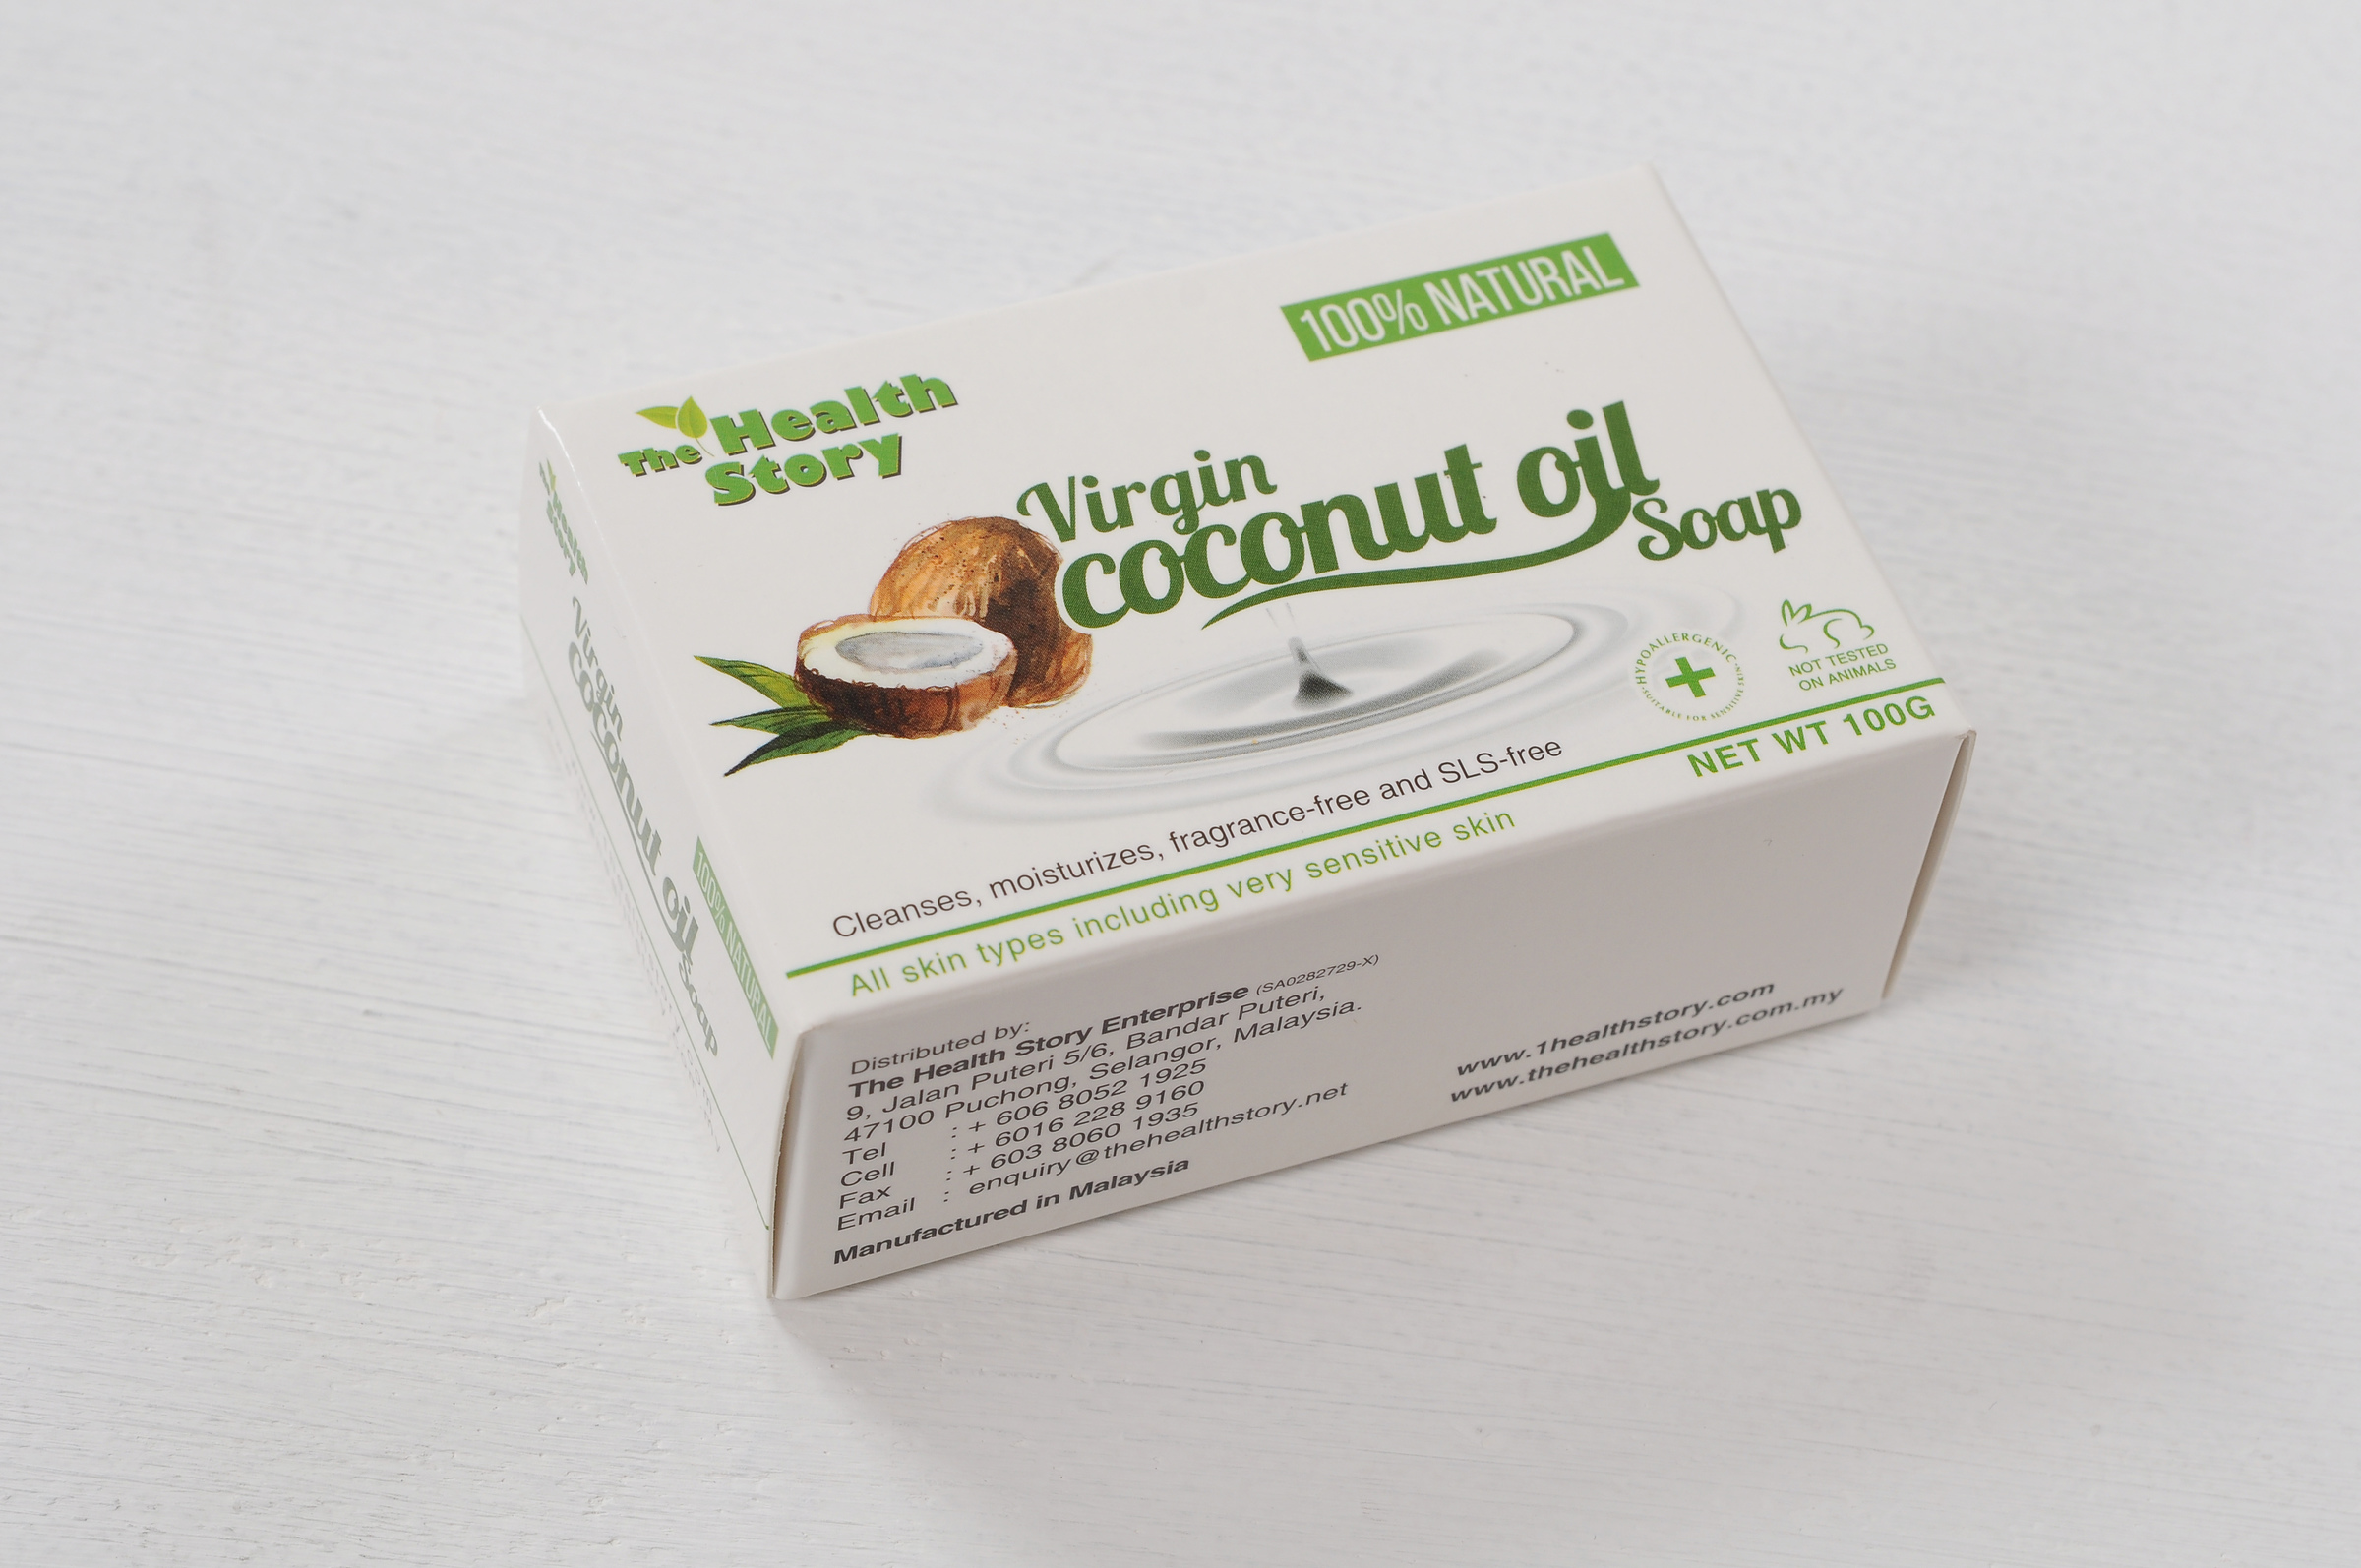 Mason Original Virgin Coconut Oil Soap